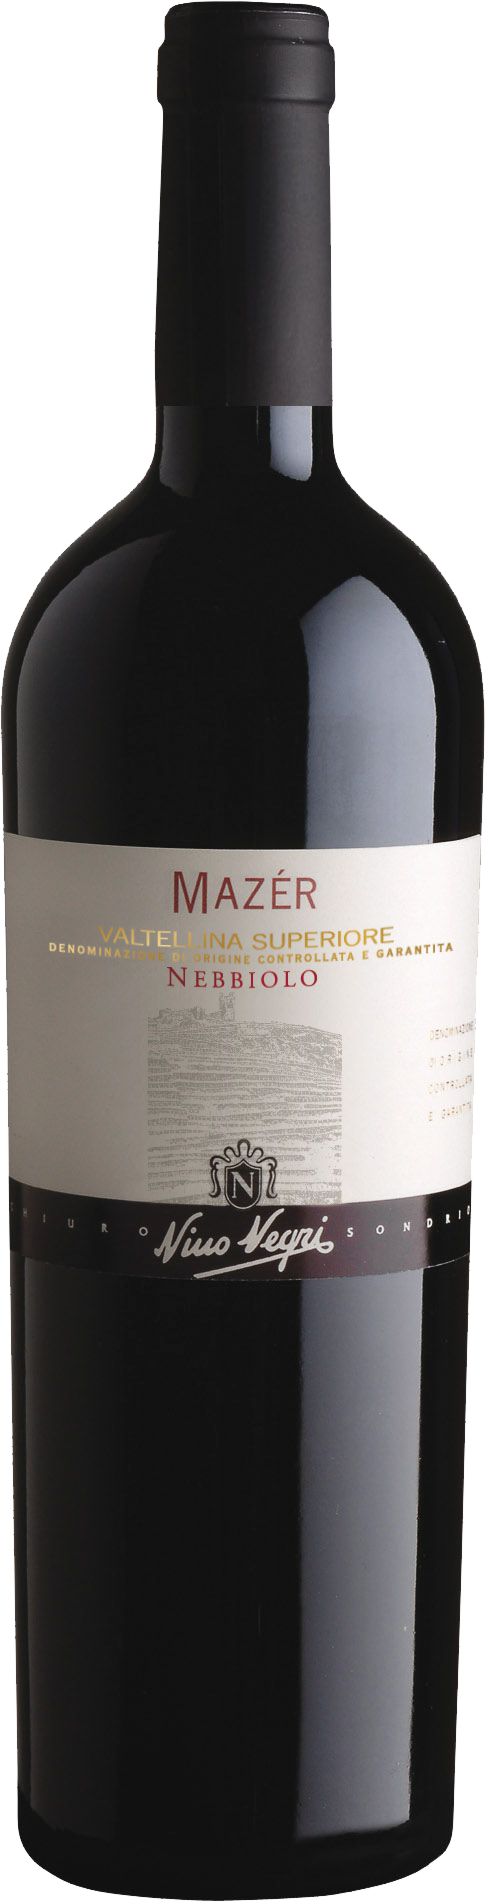 Nino Negri Mazer Valtellina Superiore Nebbiolo DOCG 2019